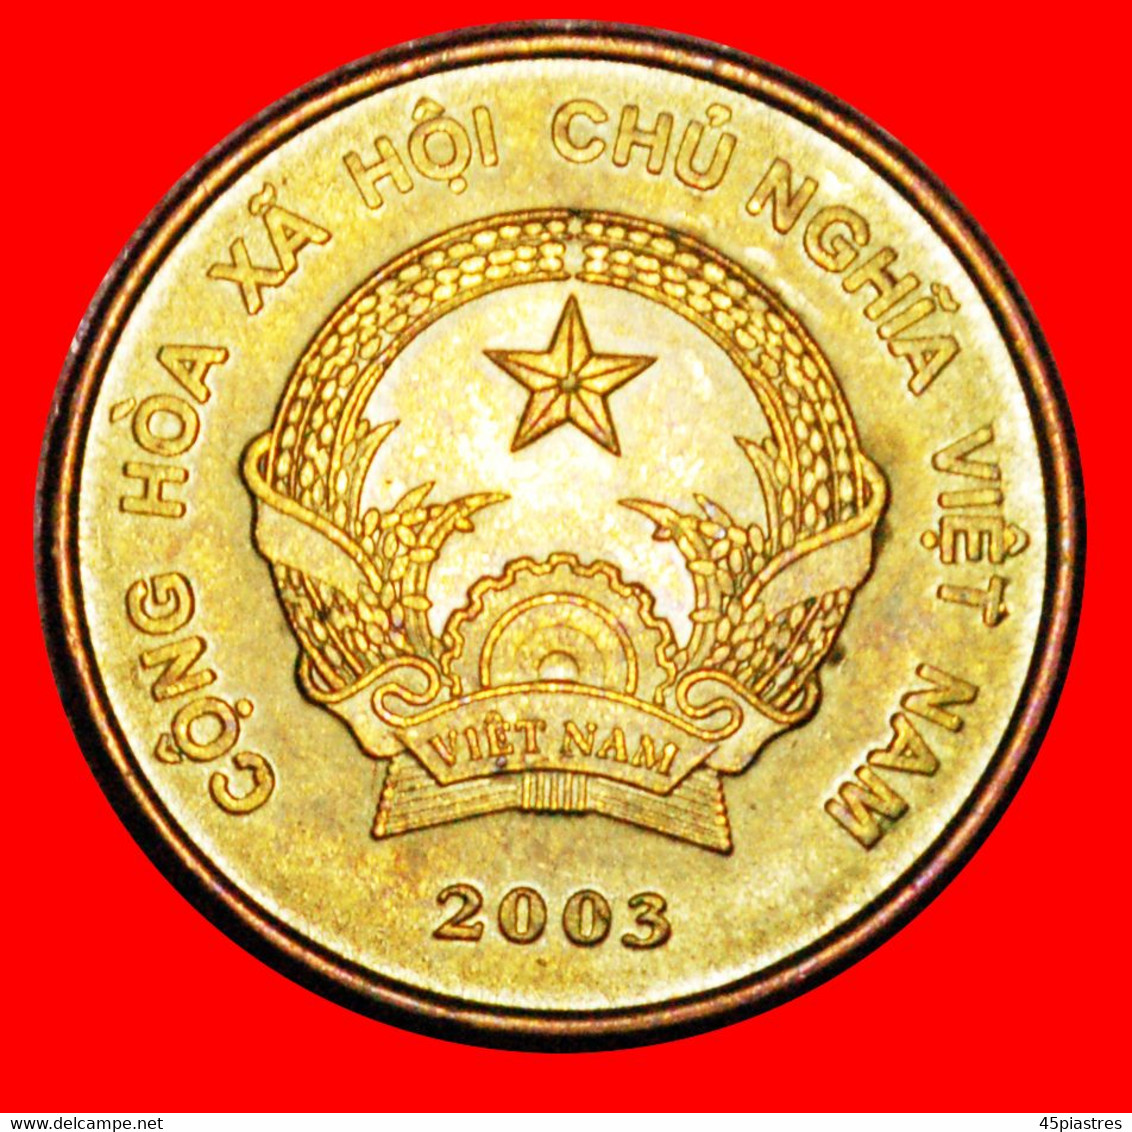 * FINLAND: VIETNAM ★ 2000 DONG 2003 UNC MINT LUSTER!  LOW START ★ NO RESERVE! - Vietnam